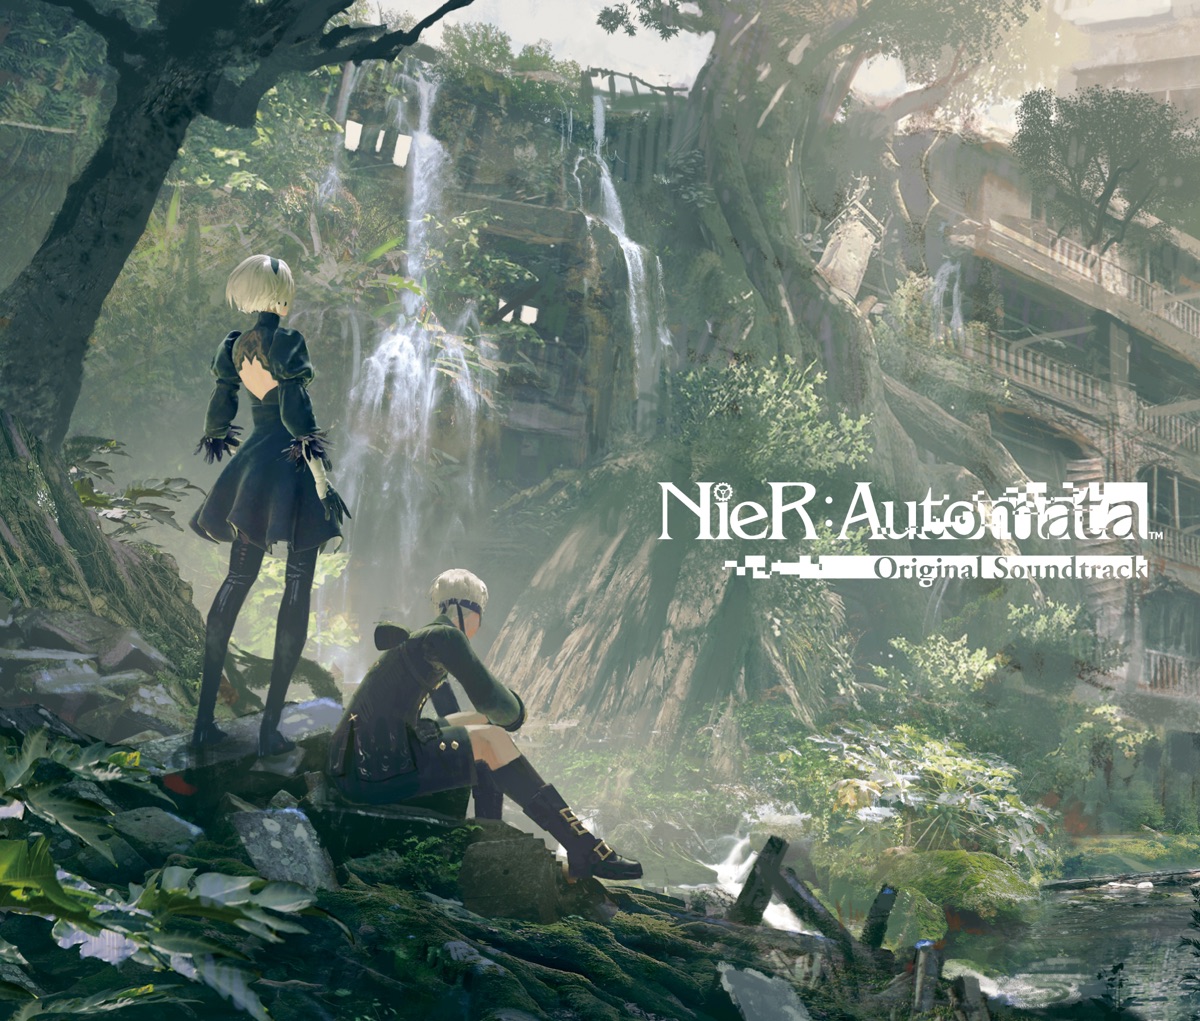 NieR:Automata (Original Soundtrack) by Keiichi Okabe on Apple Music